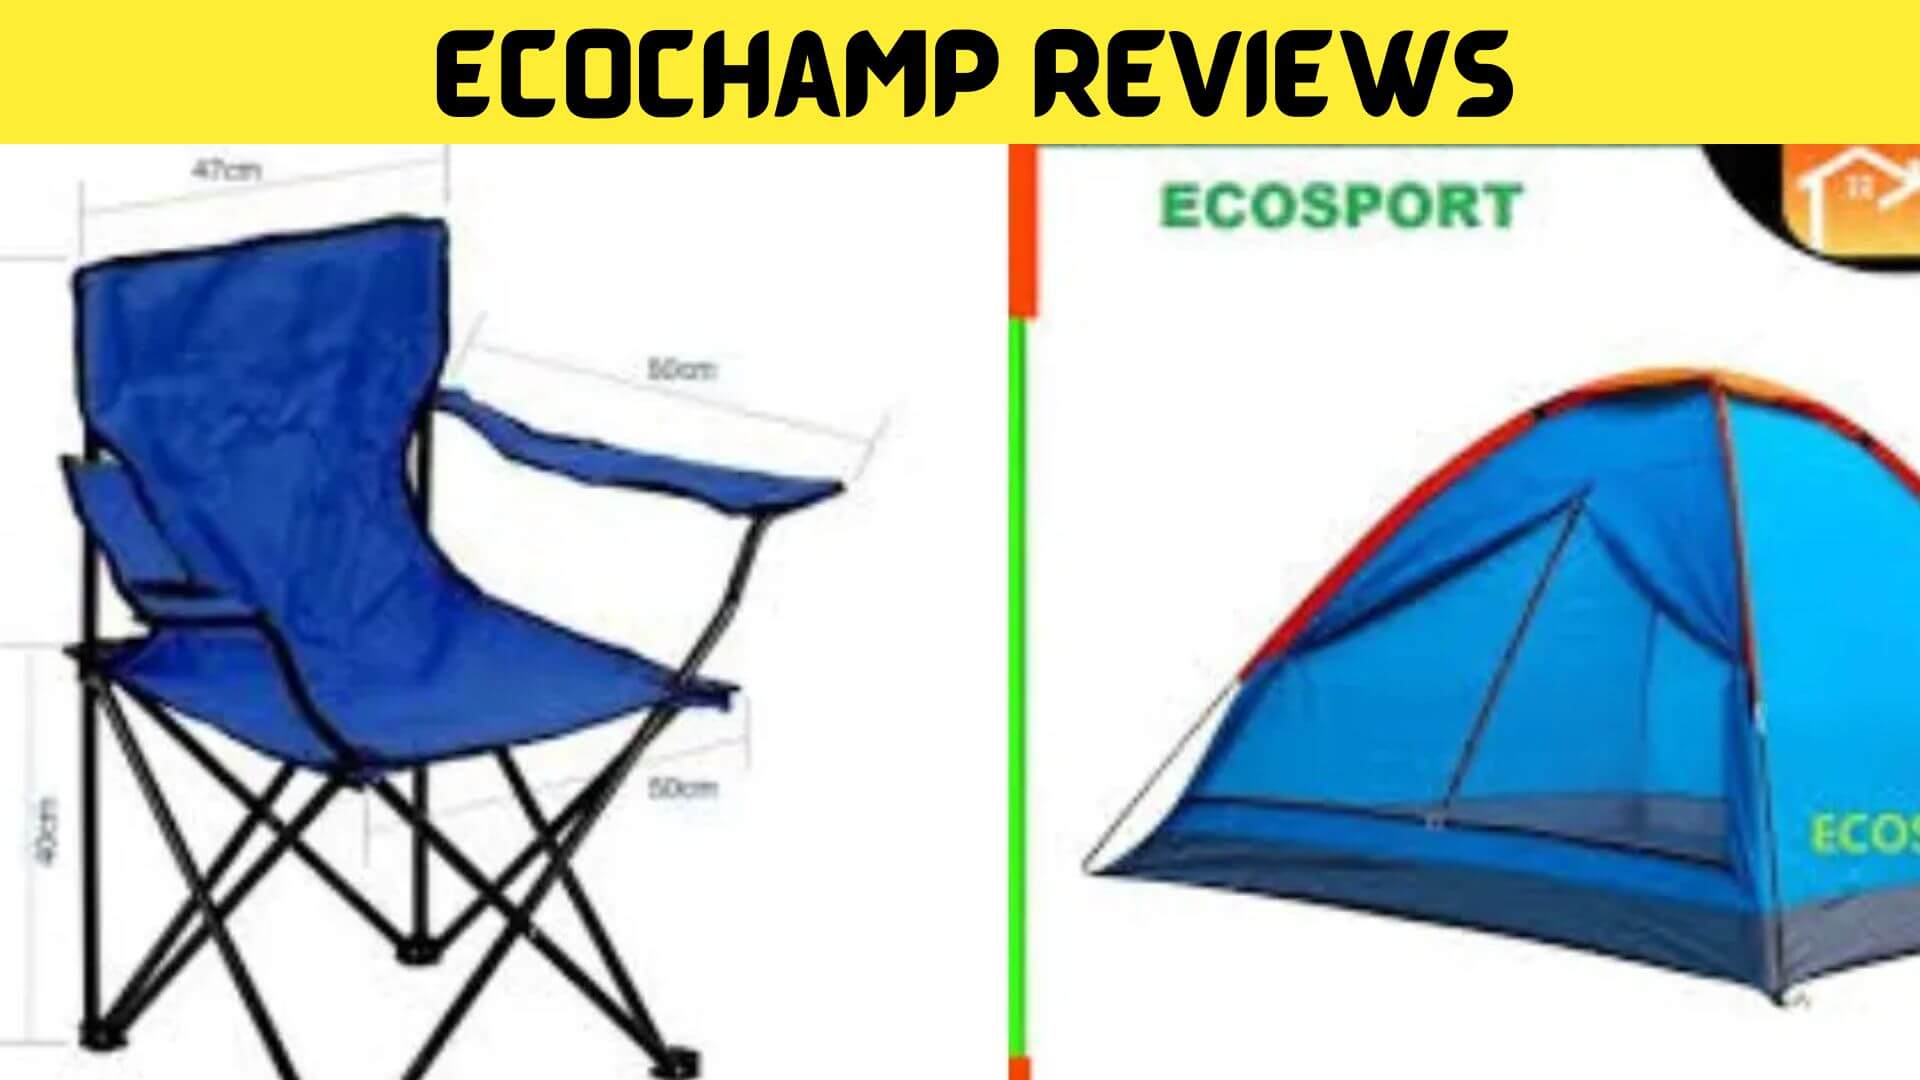 Ecochamp Reviews